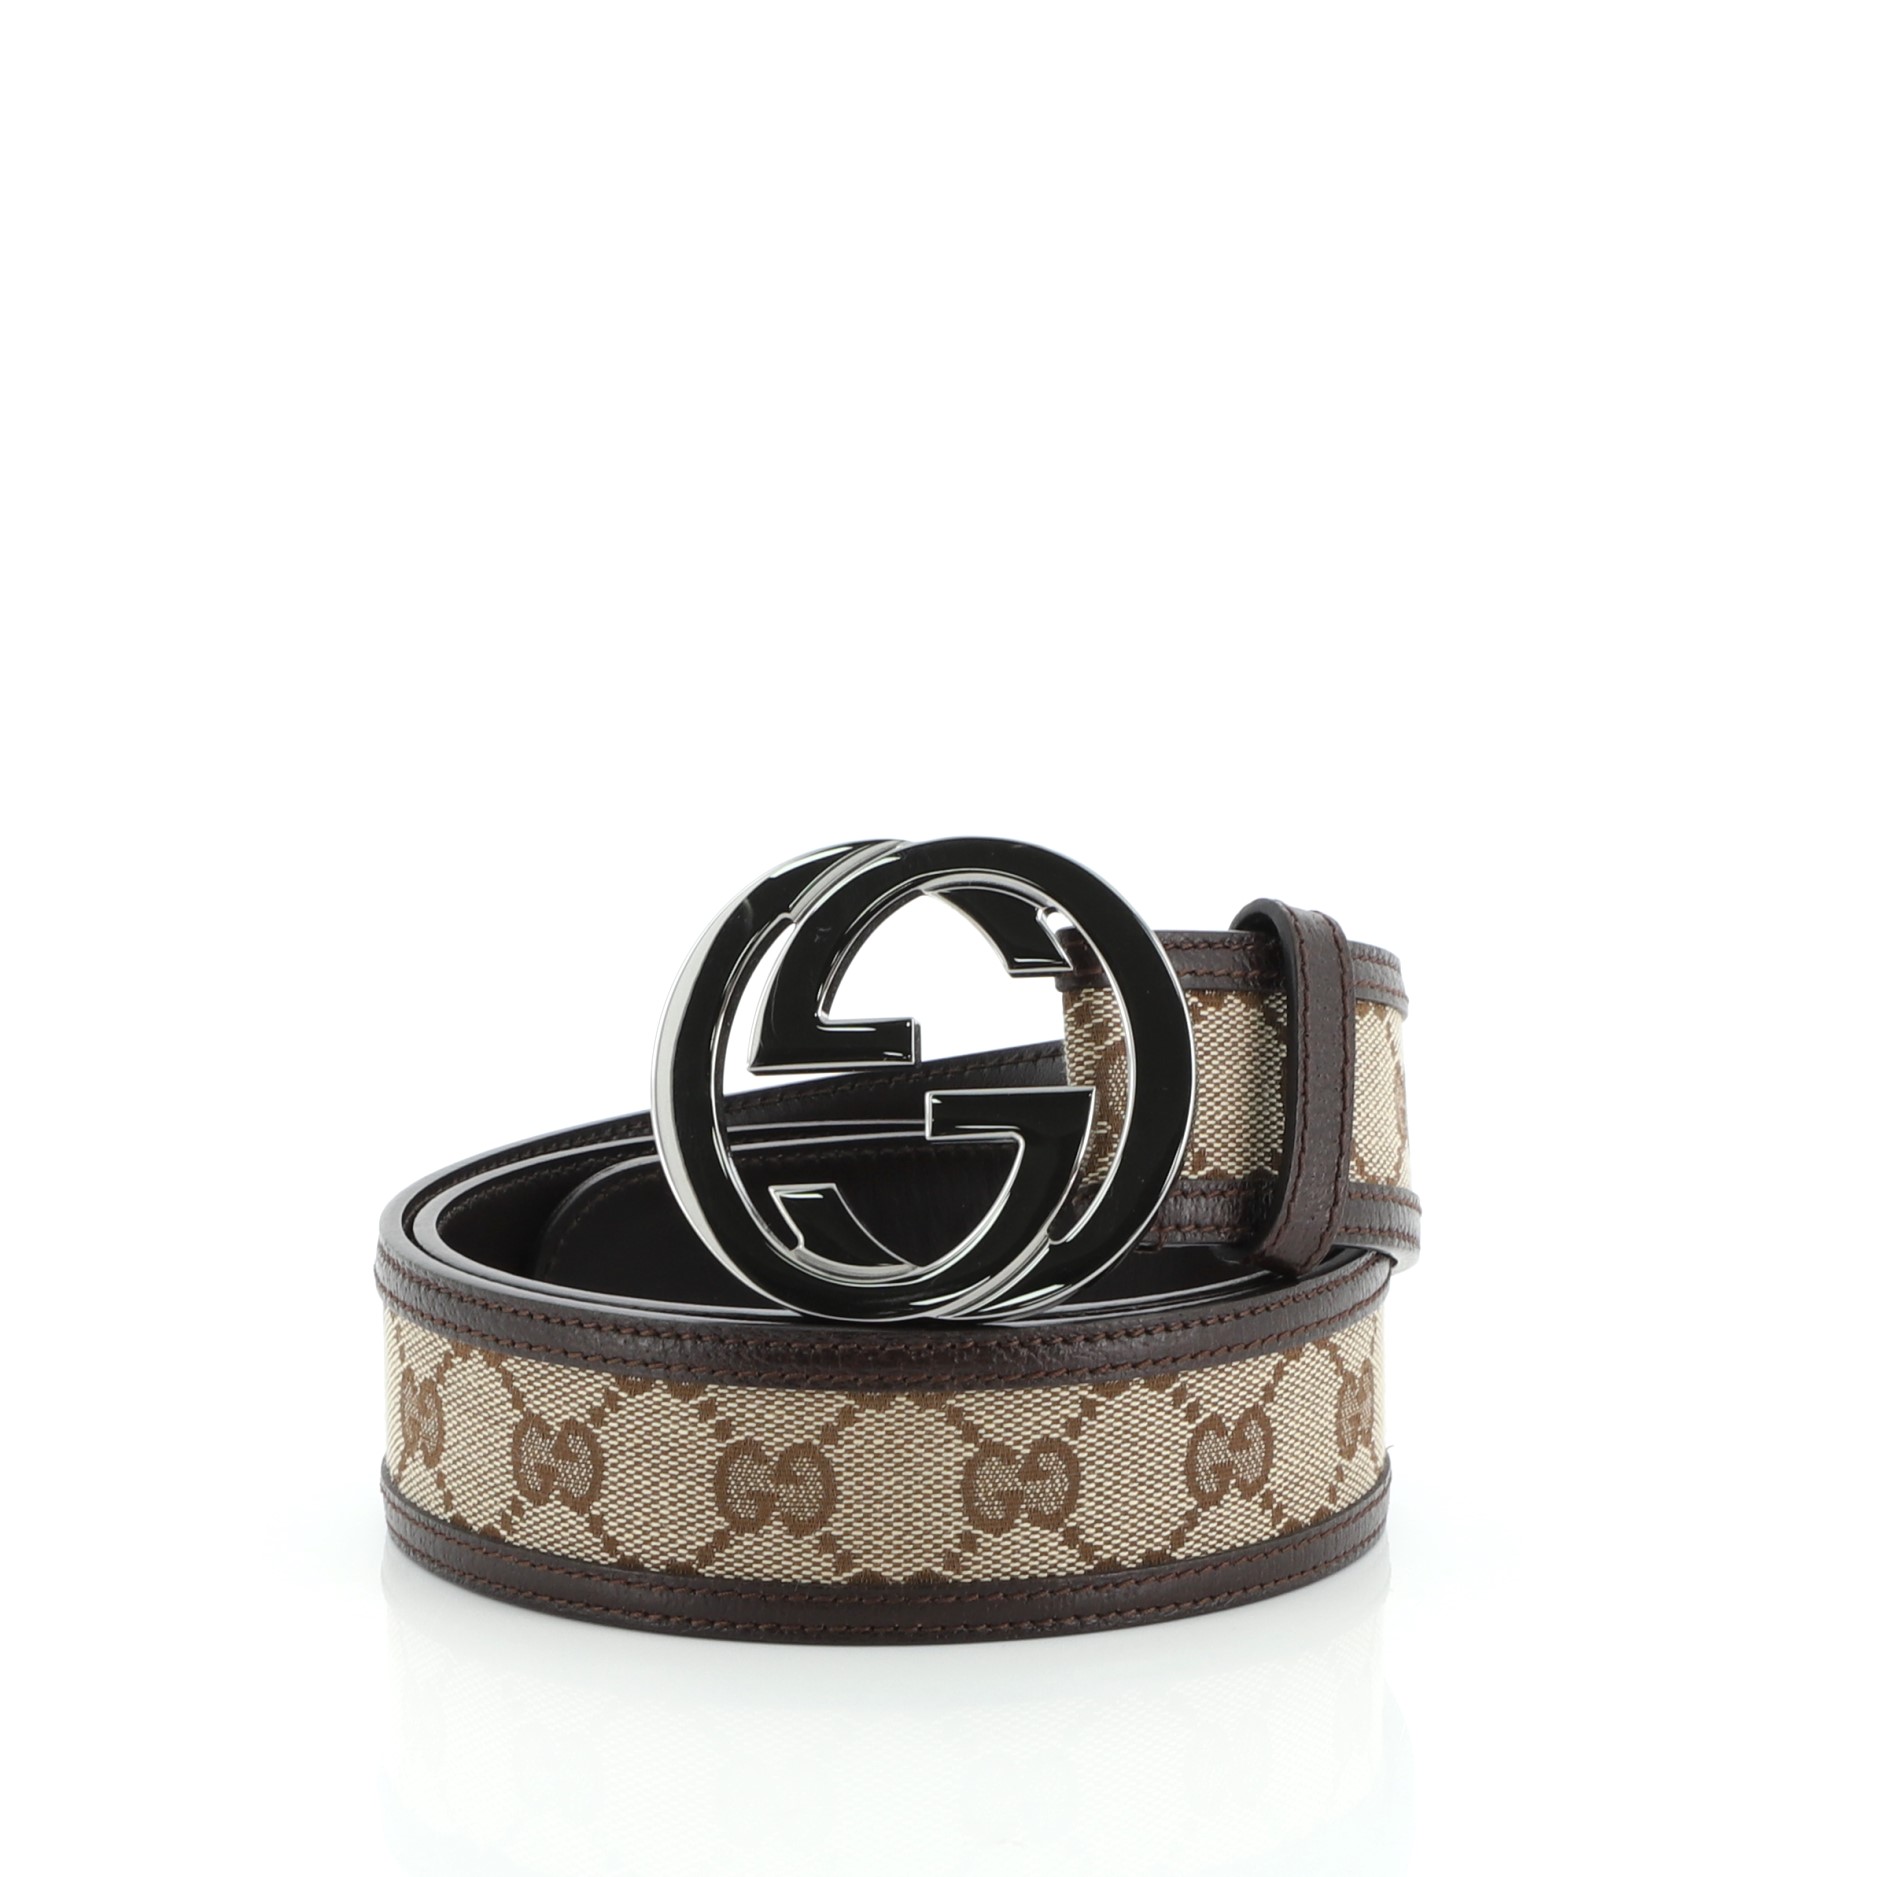 Designer Belts 101 Gucci GG Interlocking Belt